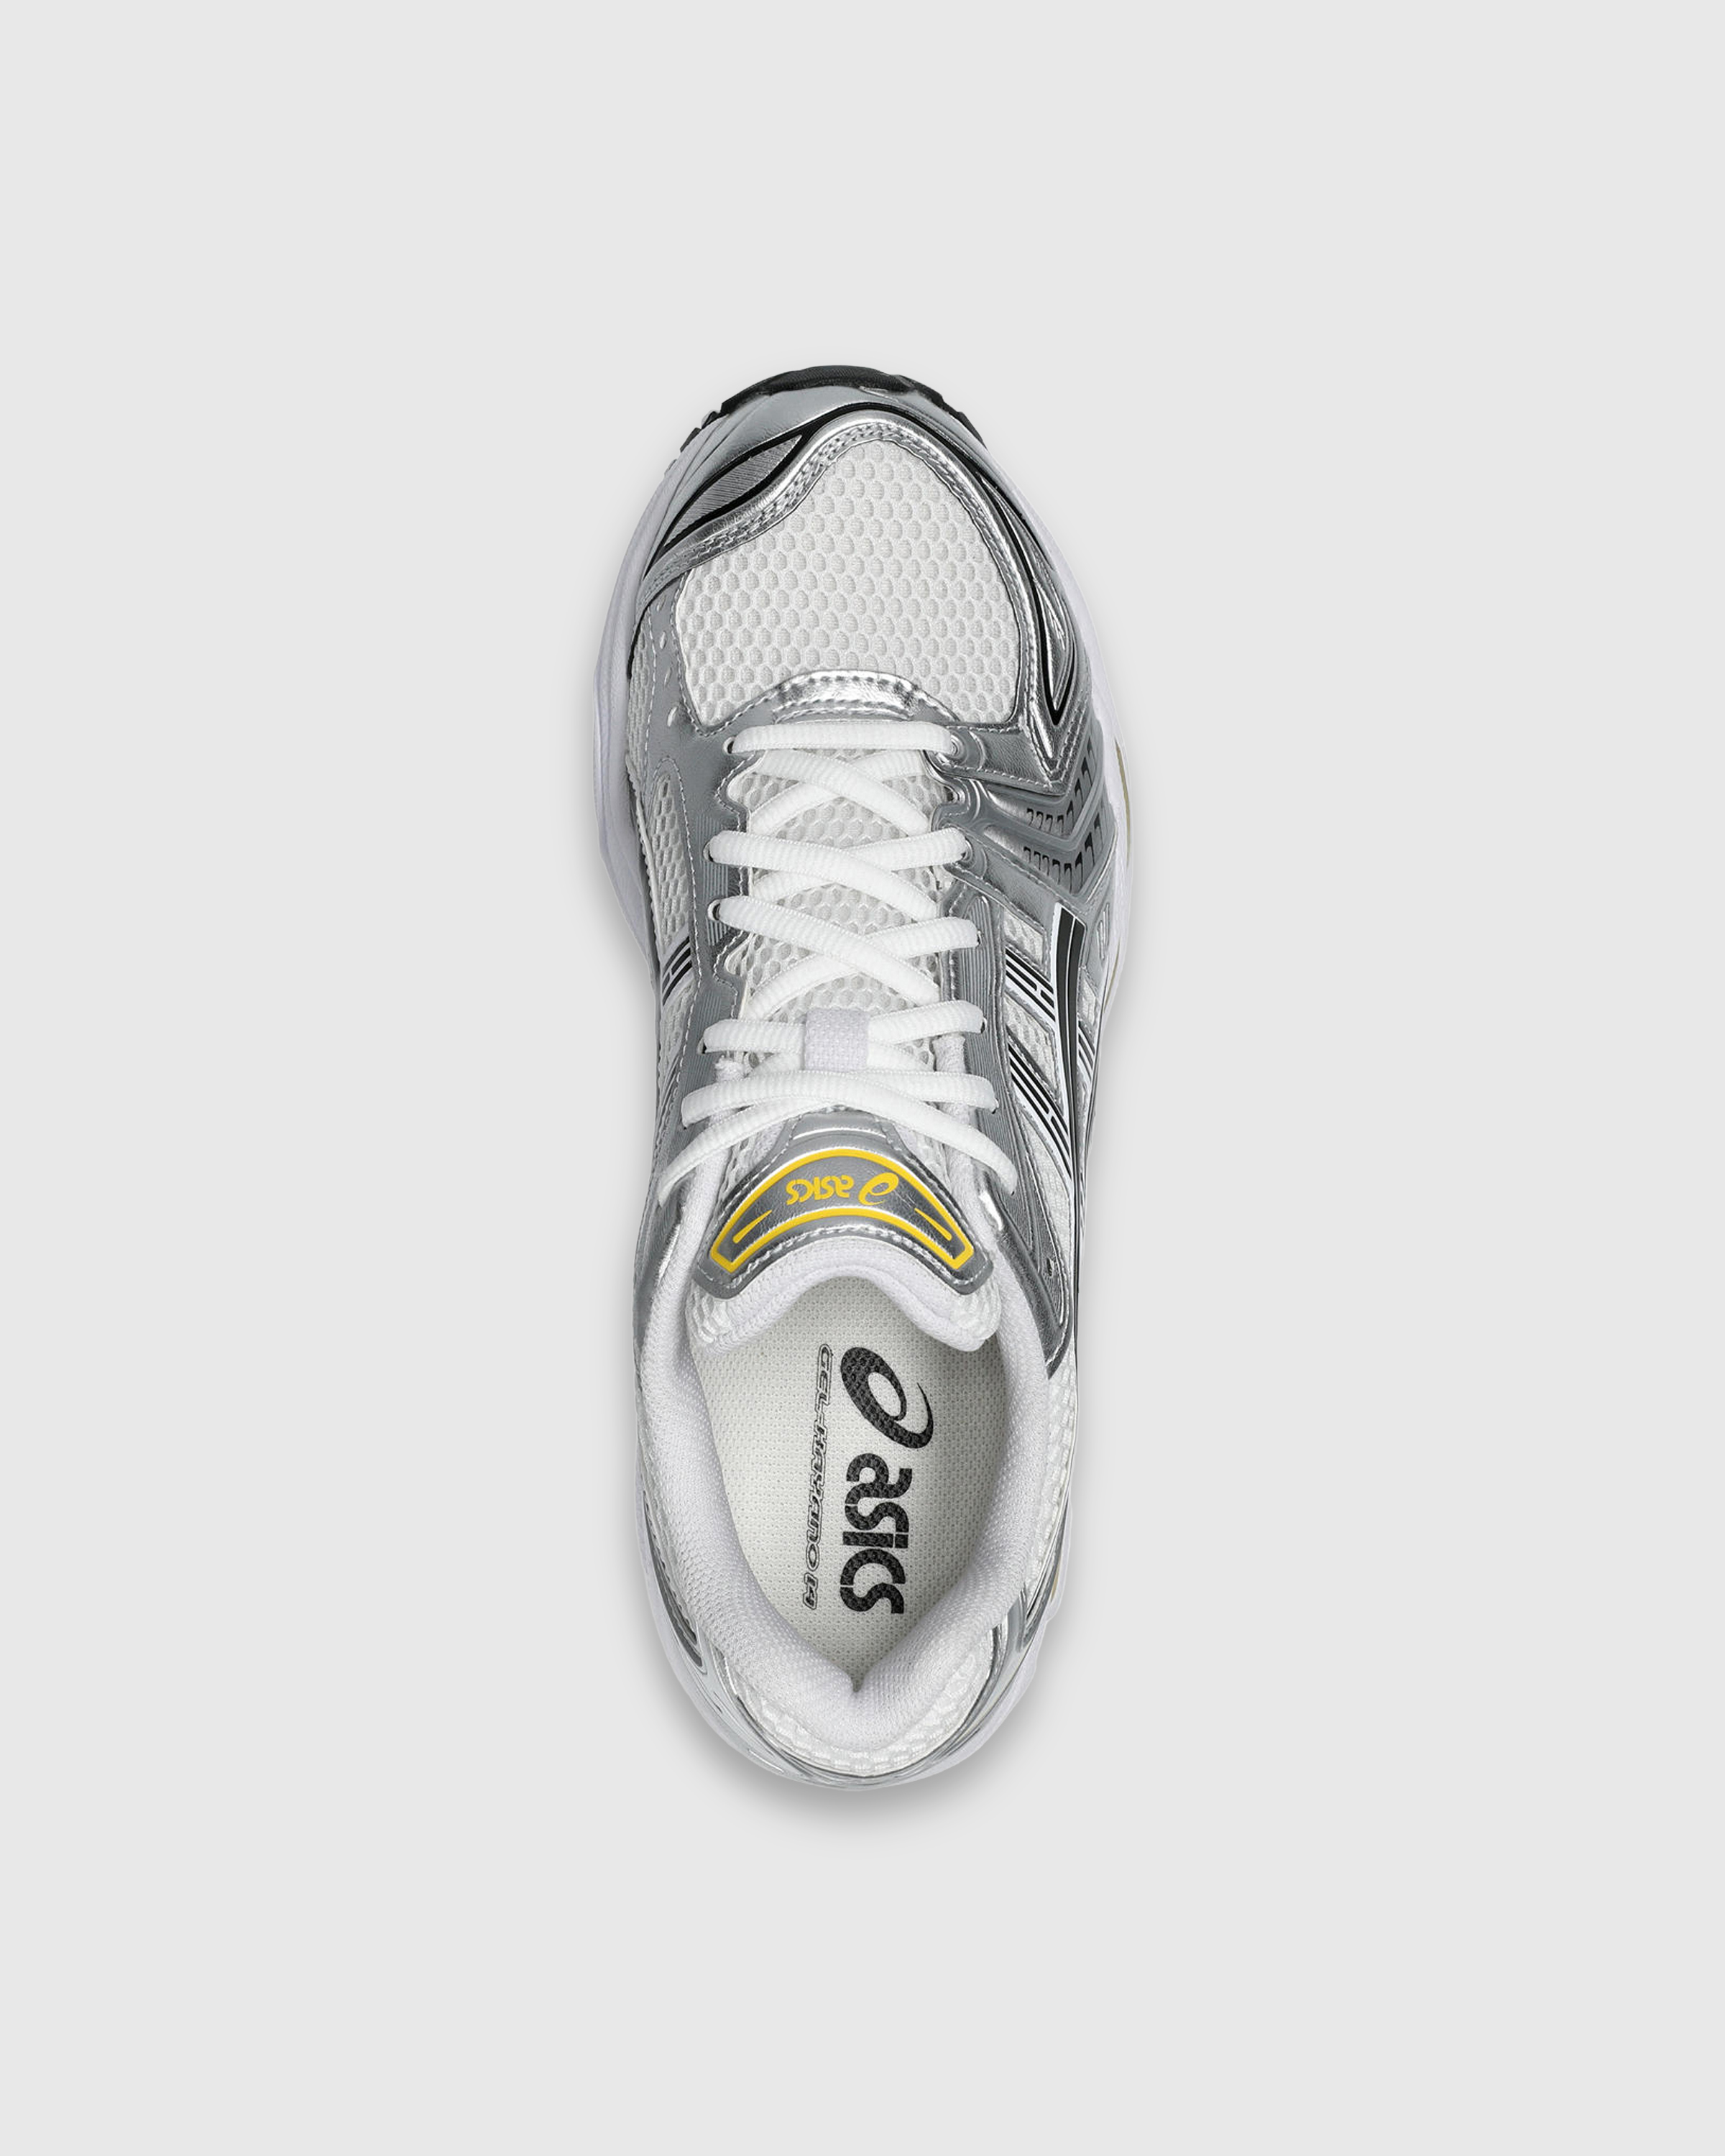 asics – GEL-KAYANO 14 White/Tai-Chi Yellow - Low Top Sneakers - Silver - Image 6